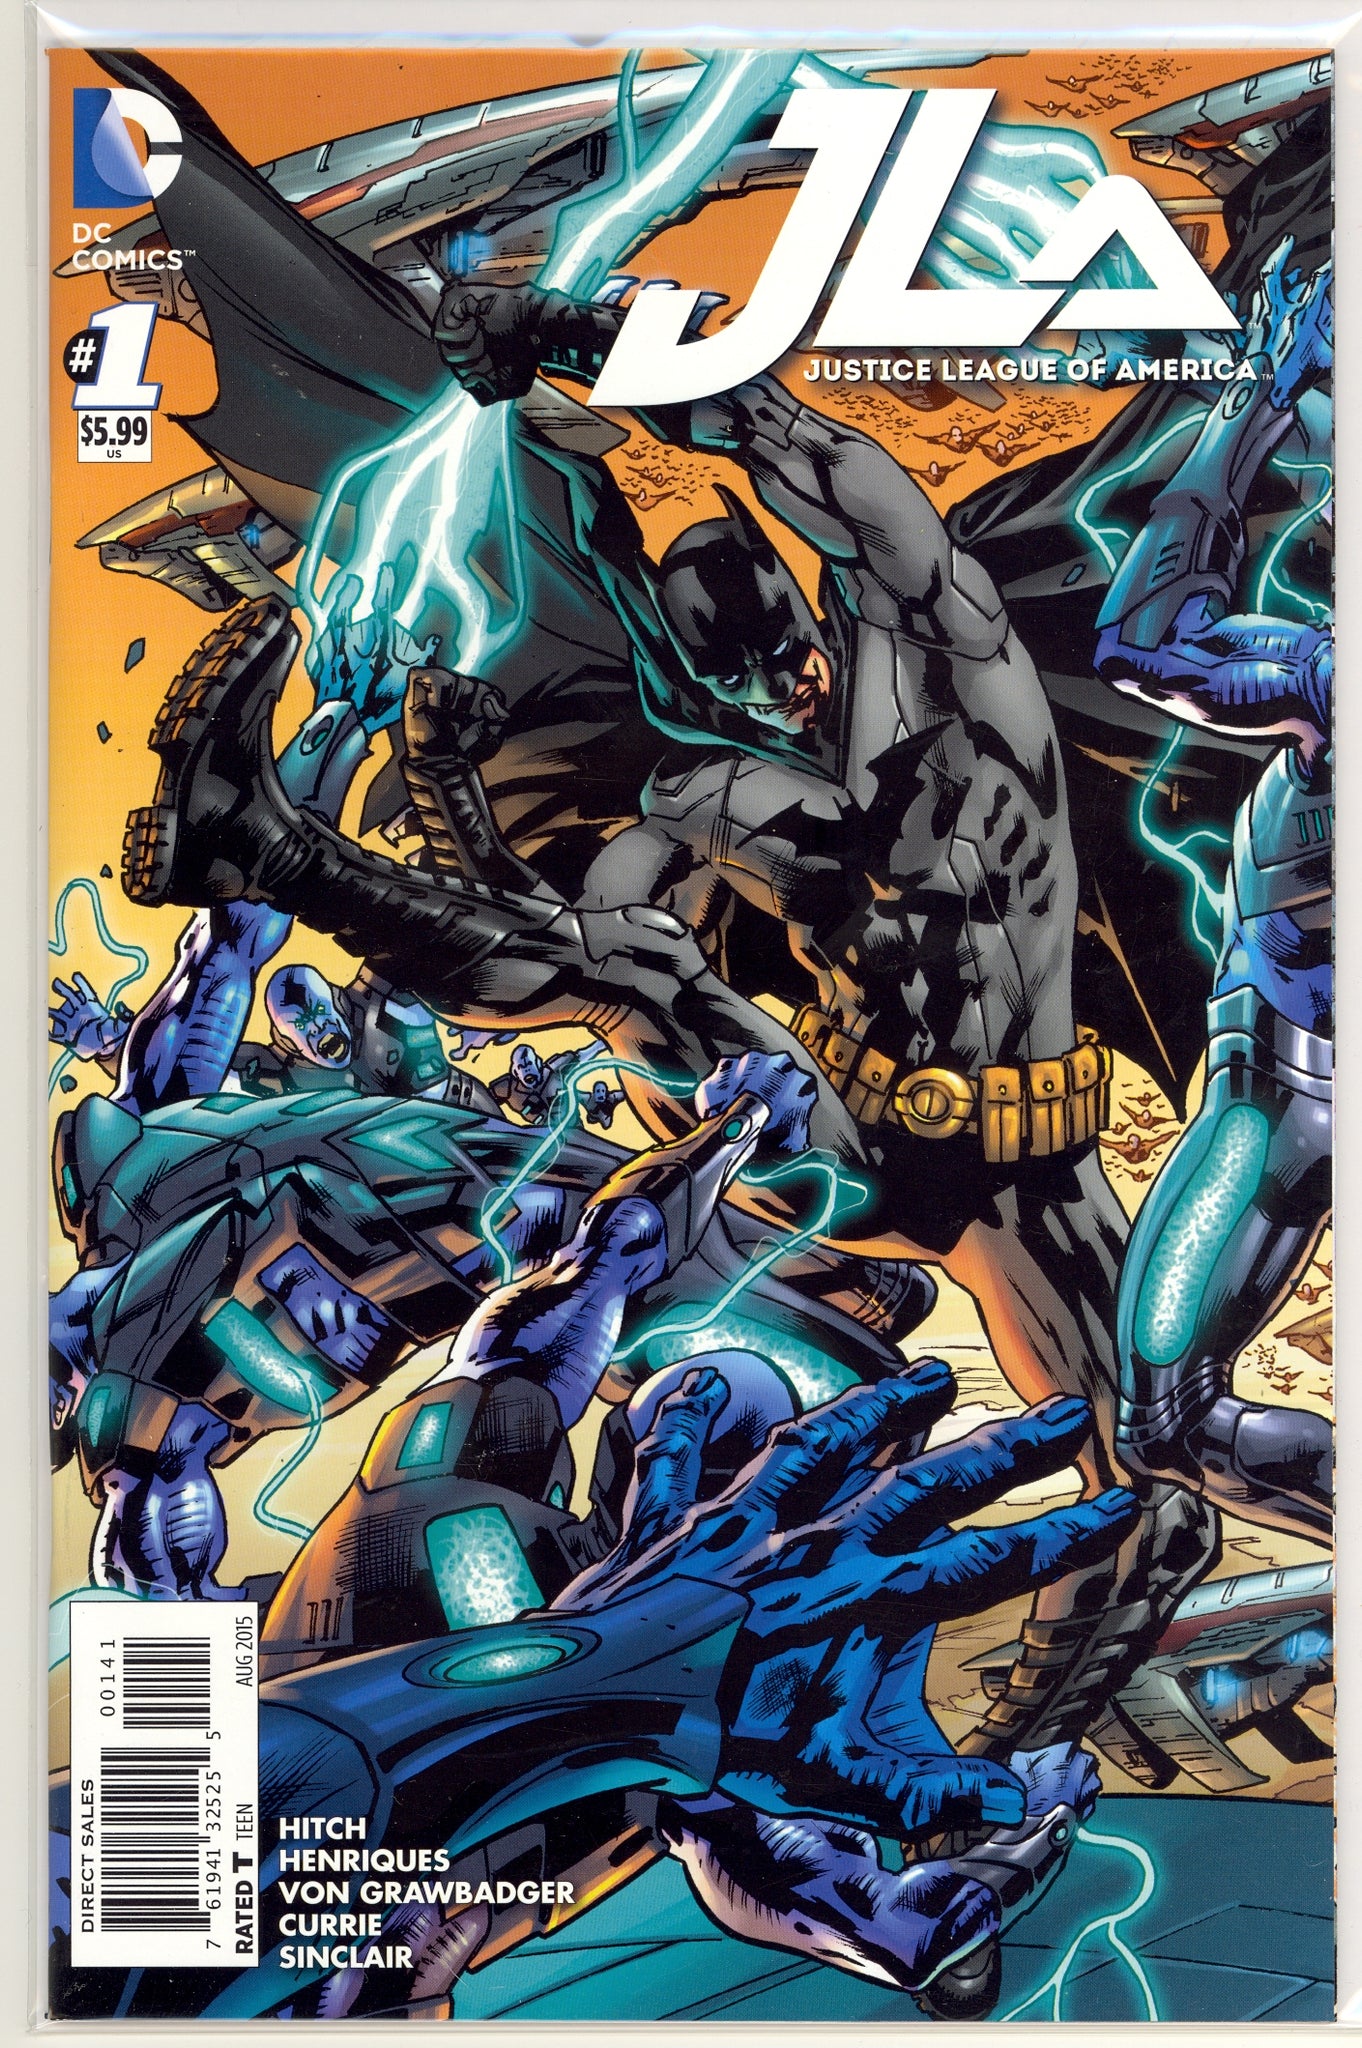 Justice League of America #1 (2015) variant cover D - Batman